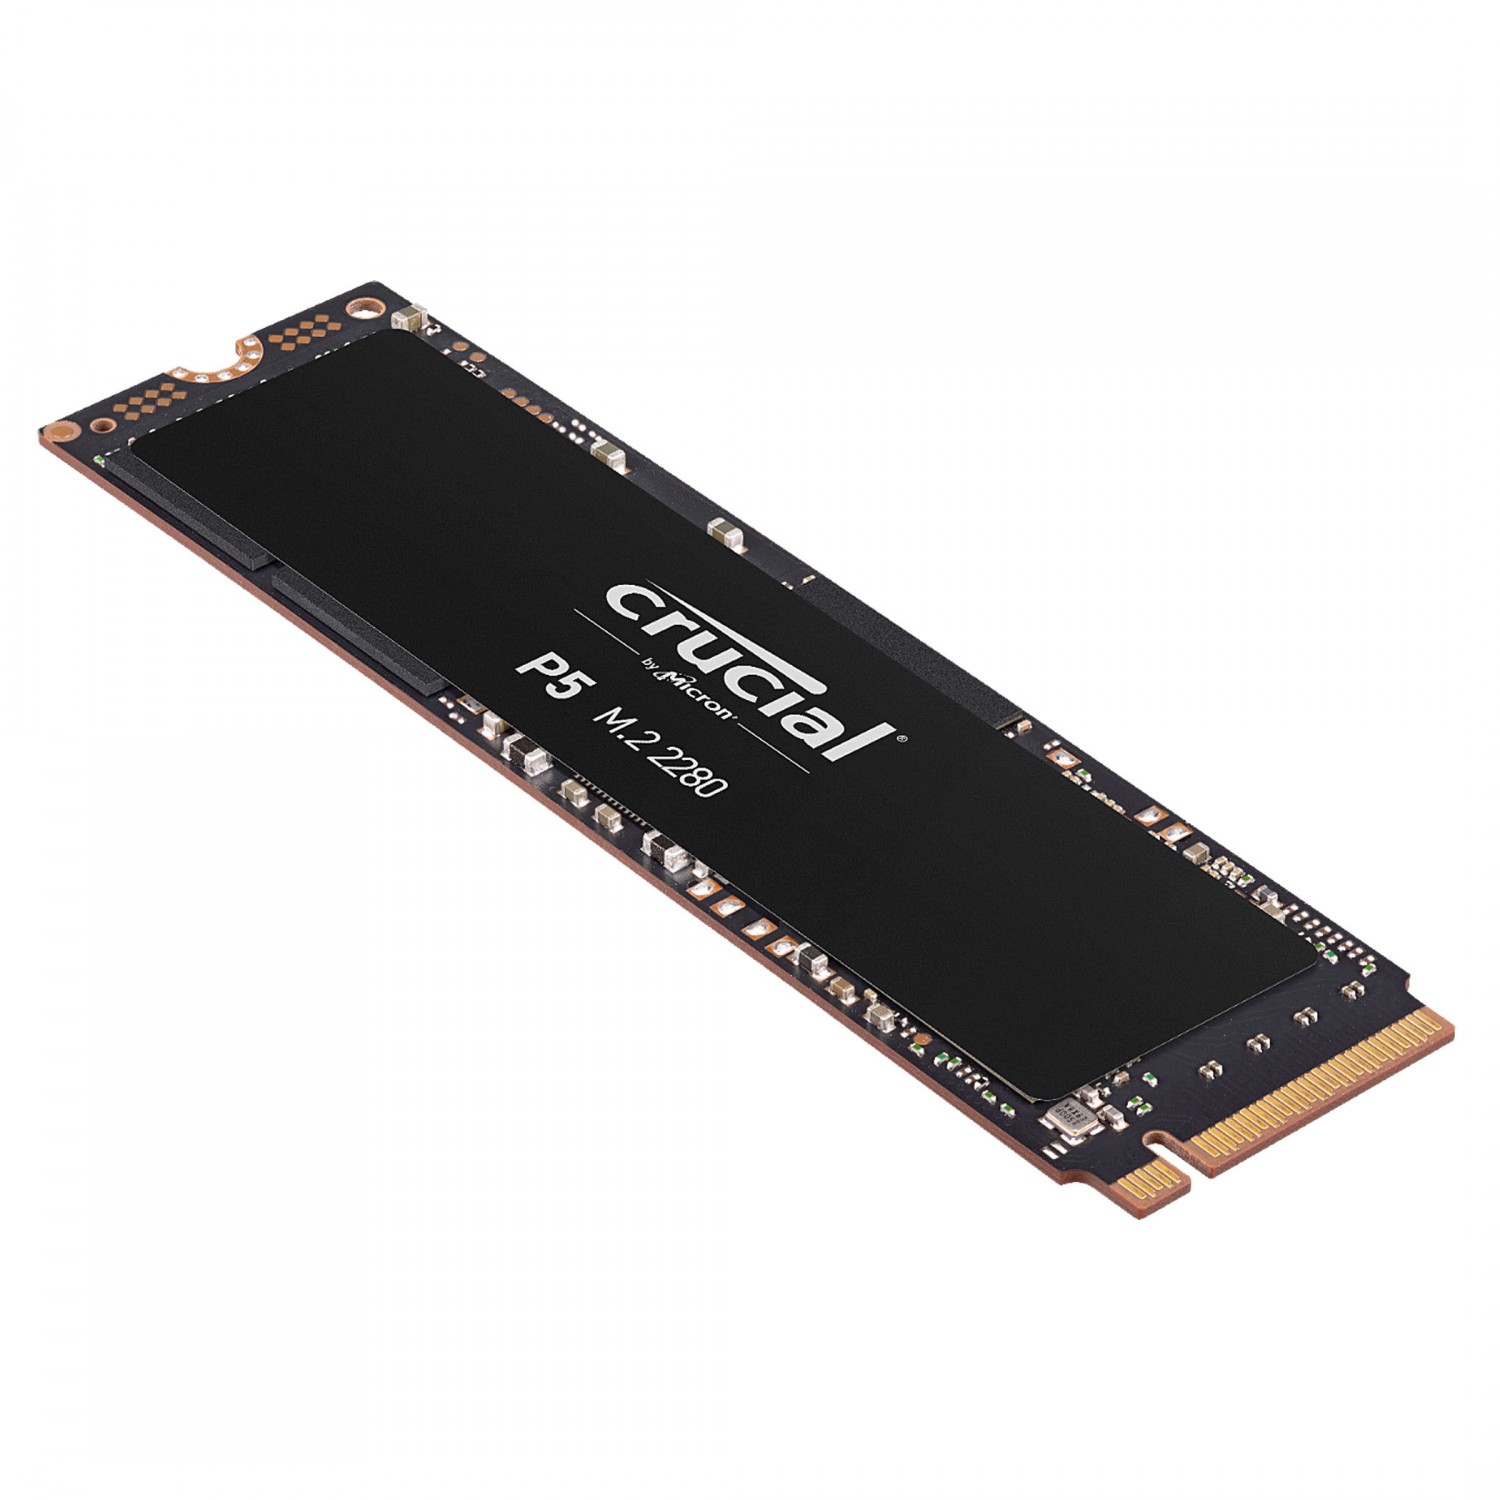 حافظه اس اس دی Crucial P5 250GB-3